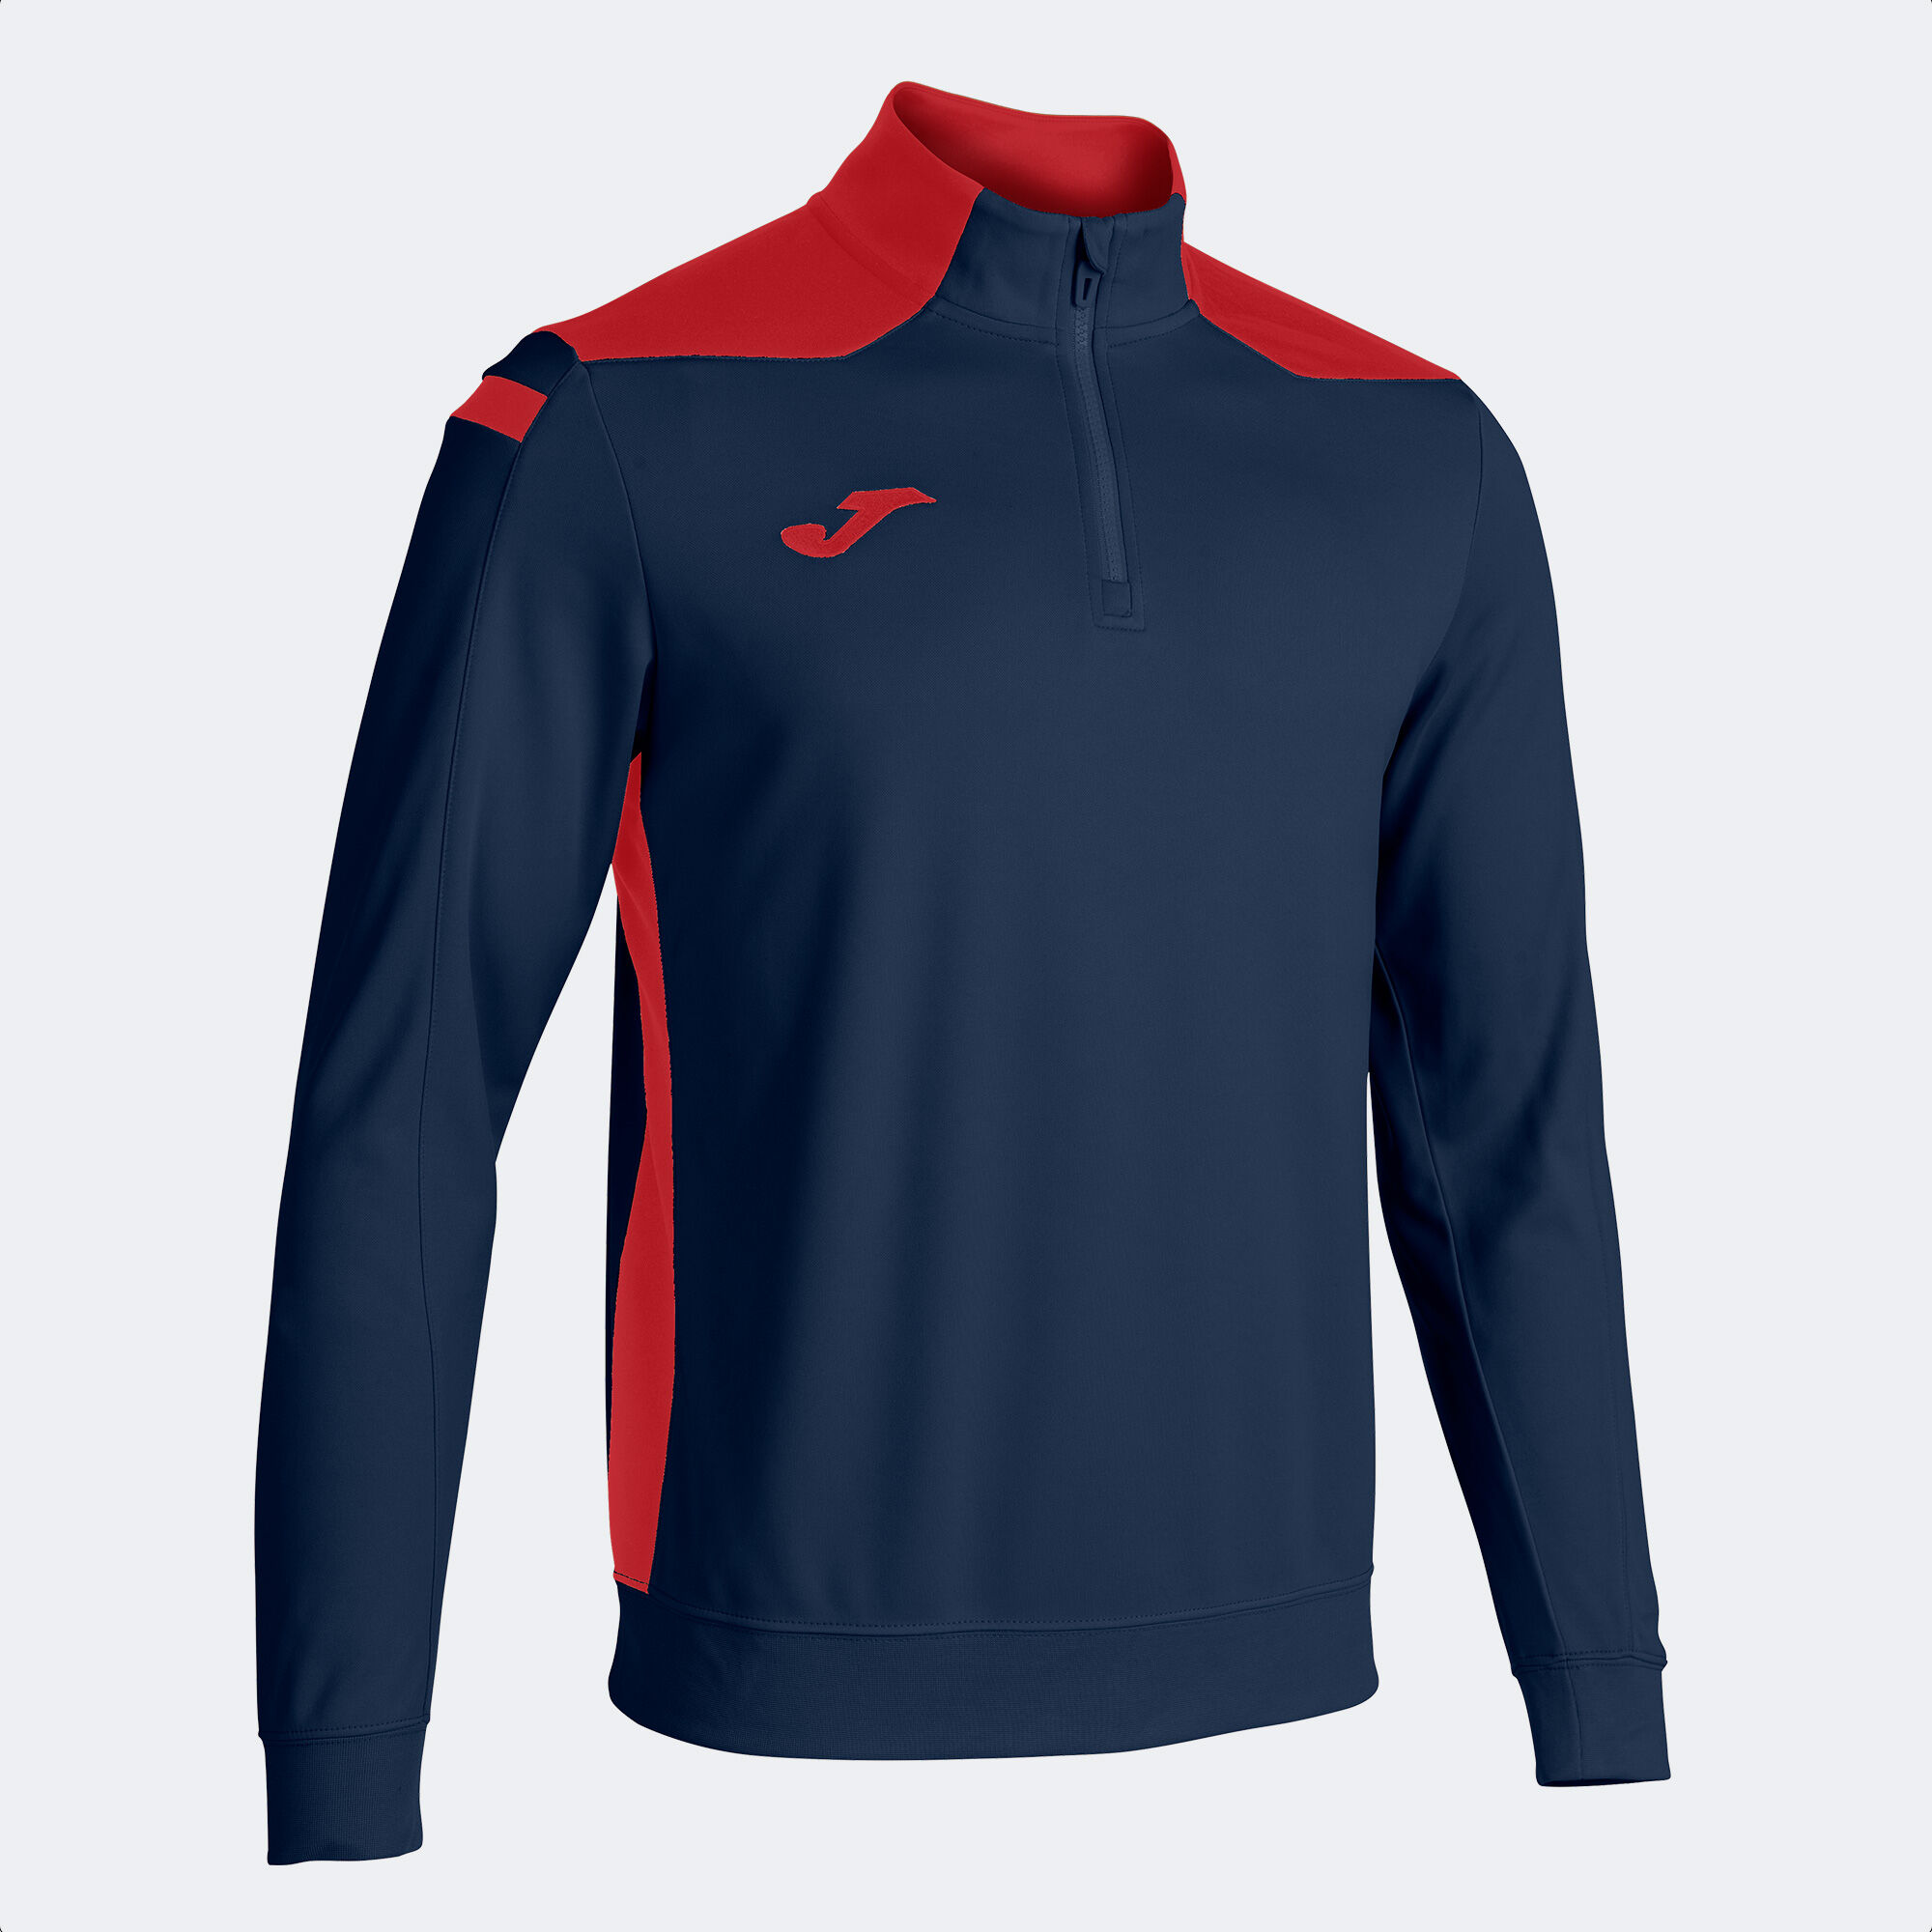 Sweat-shirt homme Championship VI bleu marine rouge